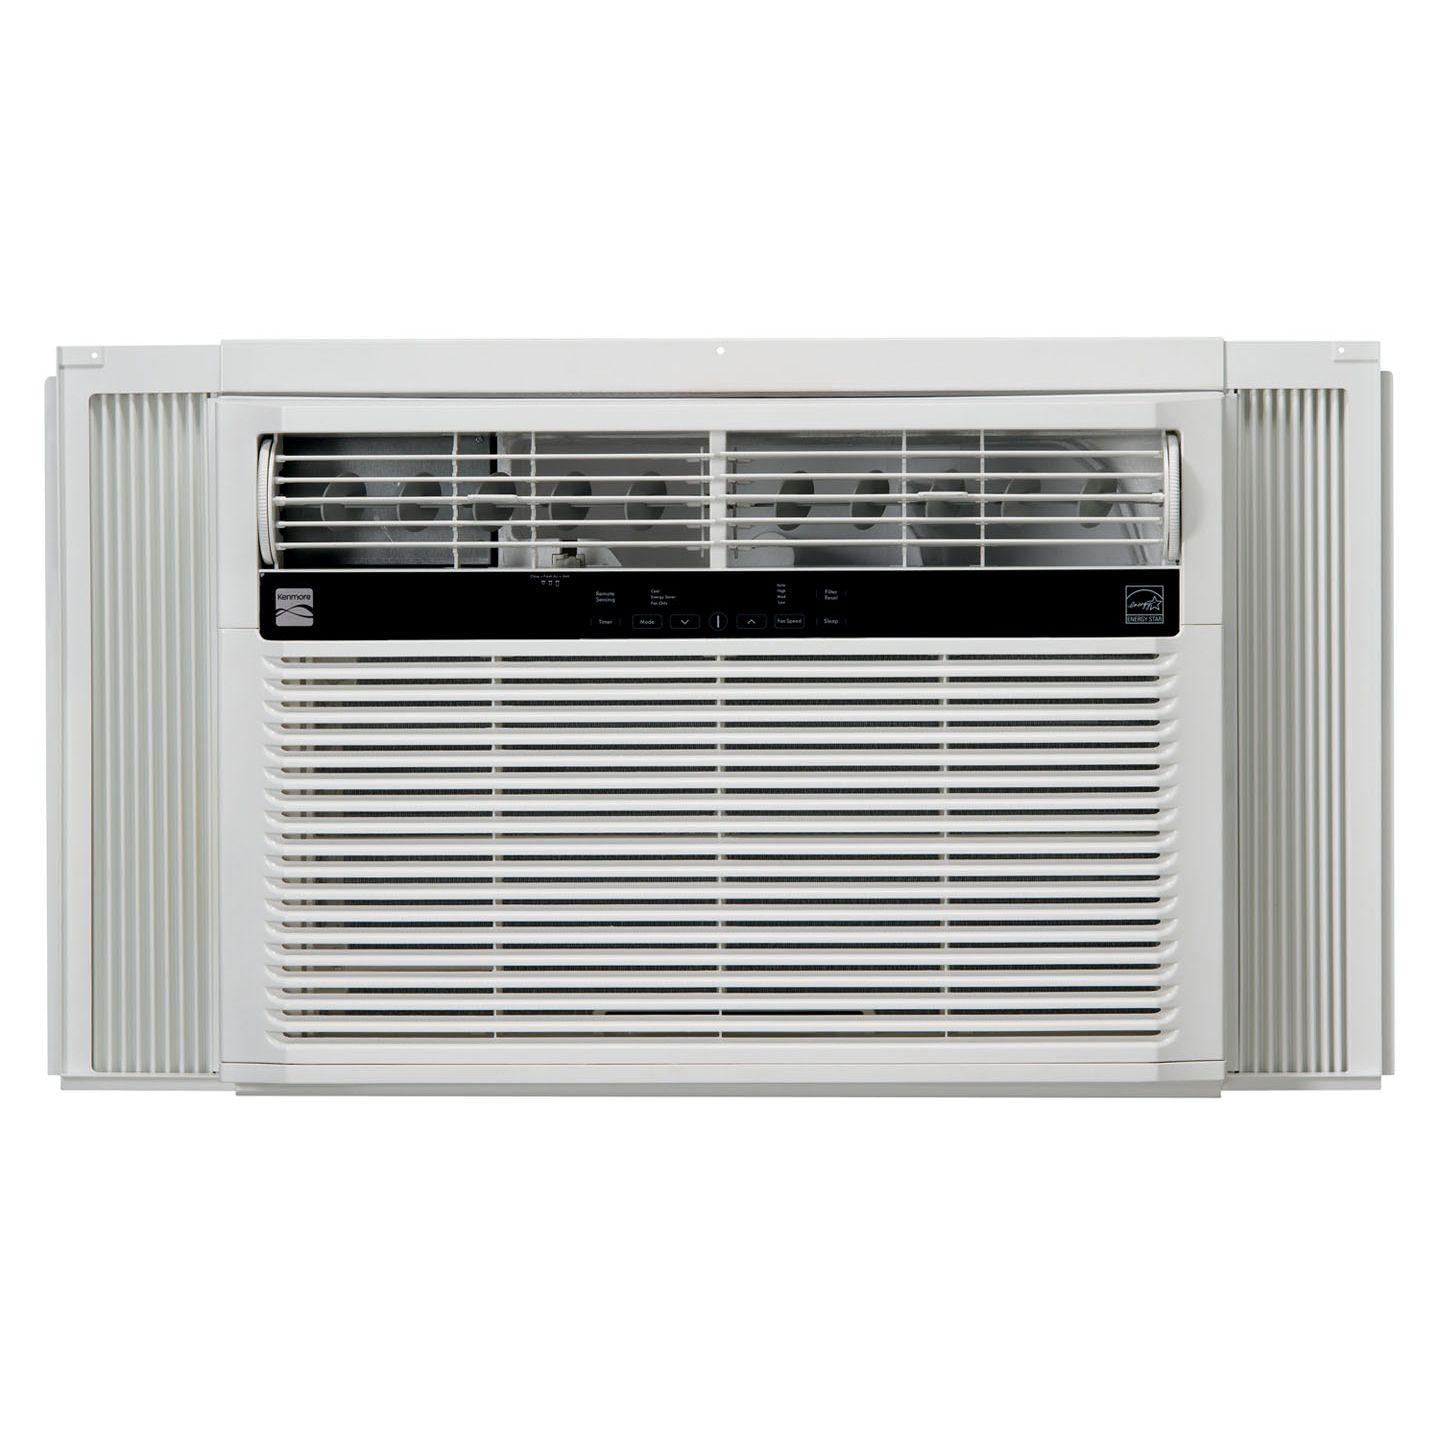 Kenmore 70251 25 000 Btu Room Air Conditioner